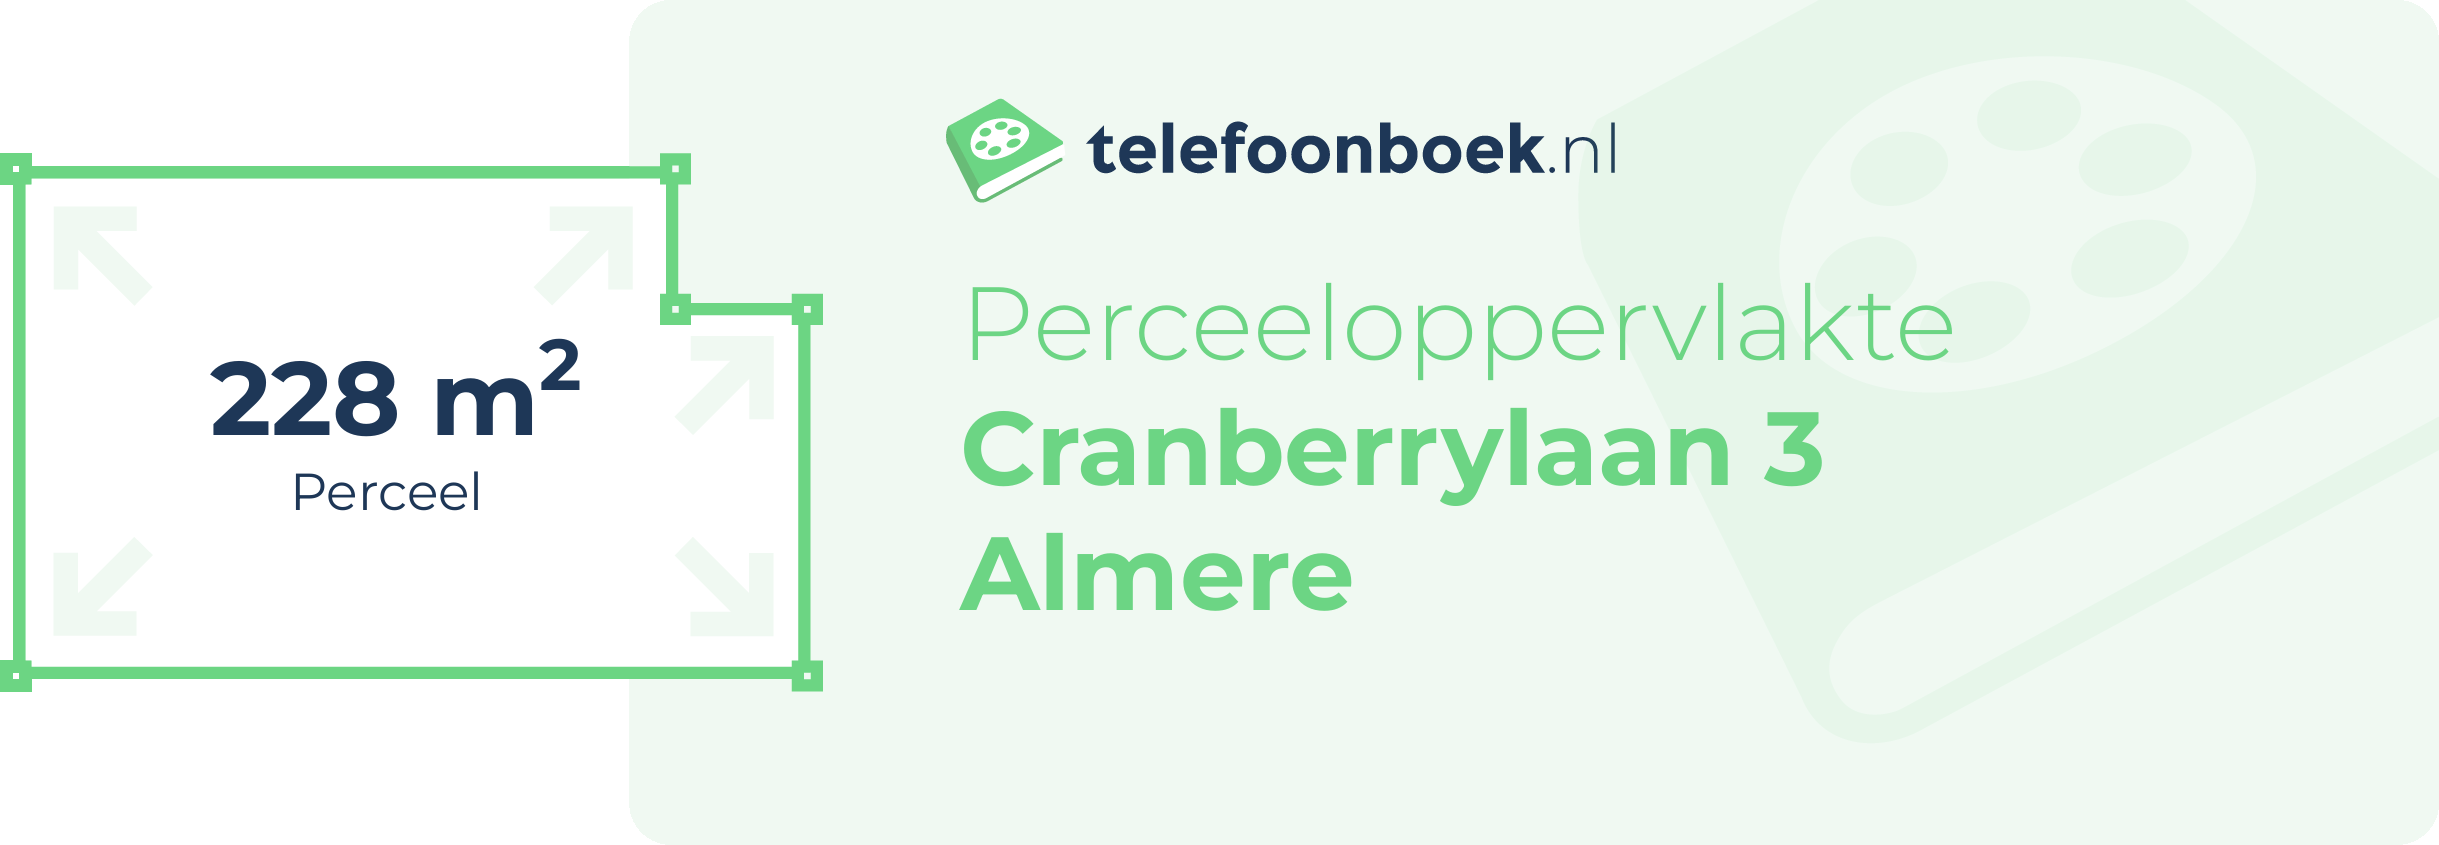 Perceeloppervlakte Cranberrylaan 3 Almere